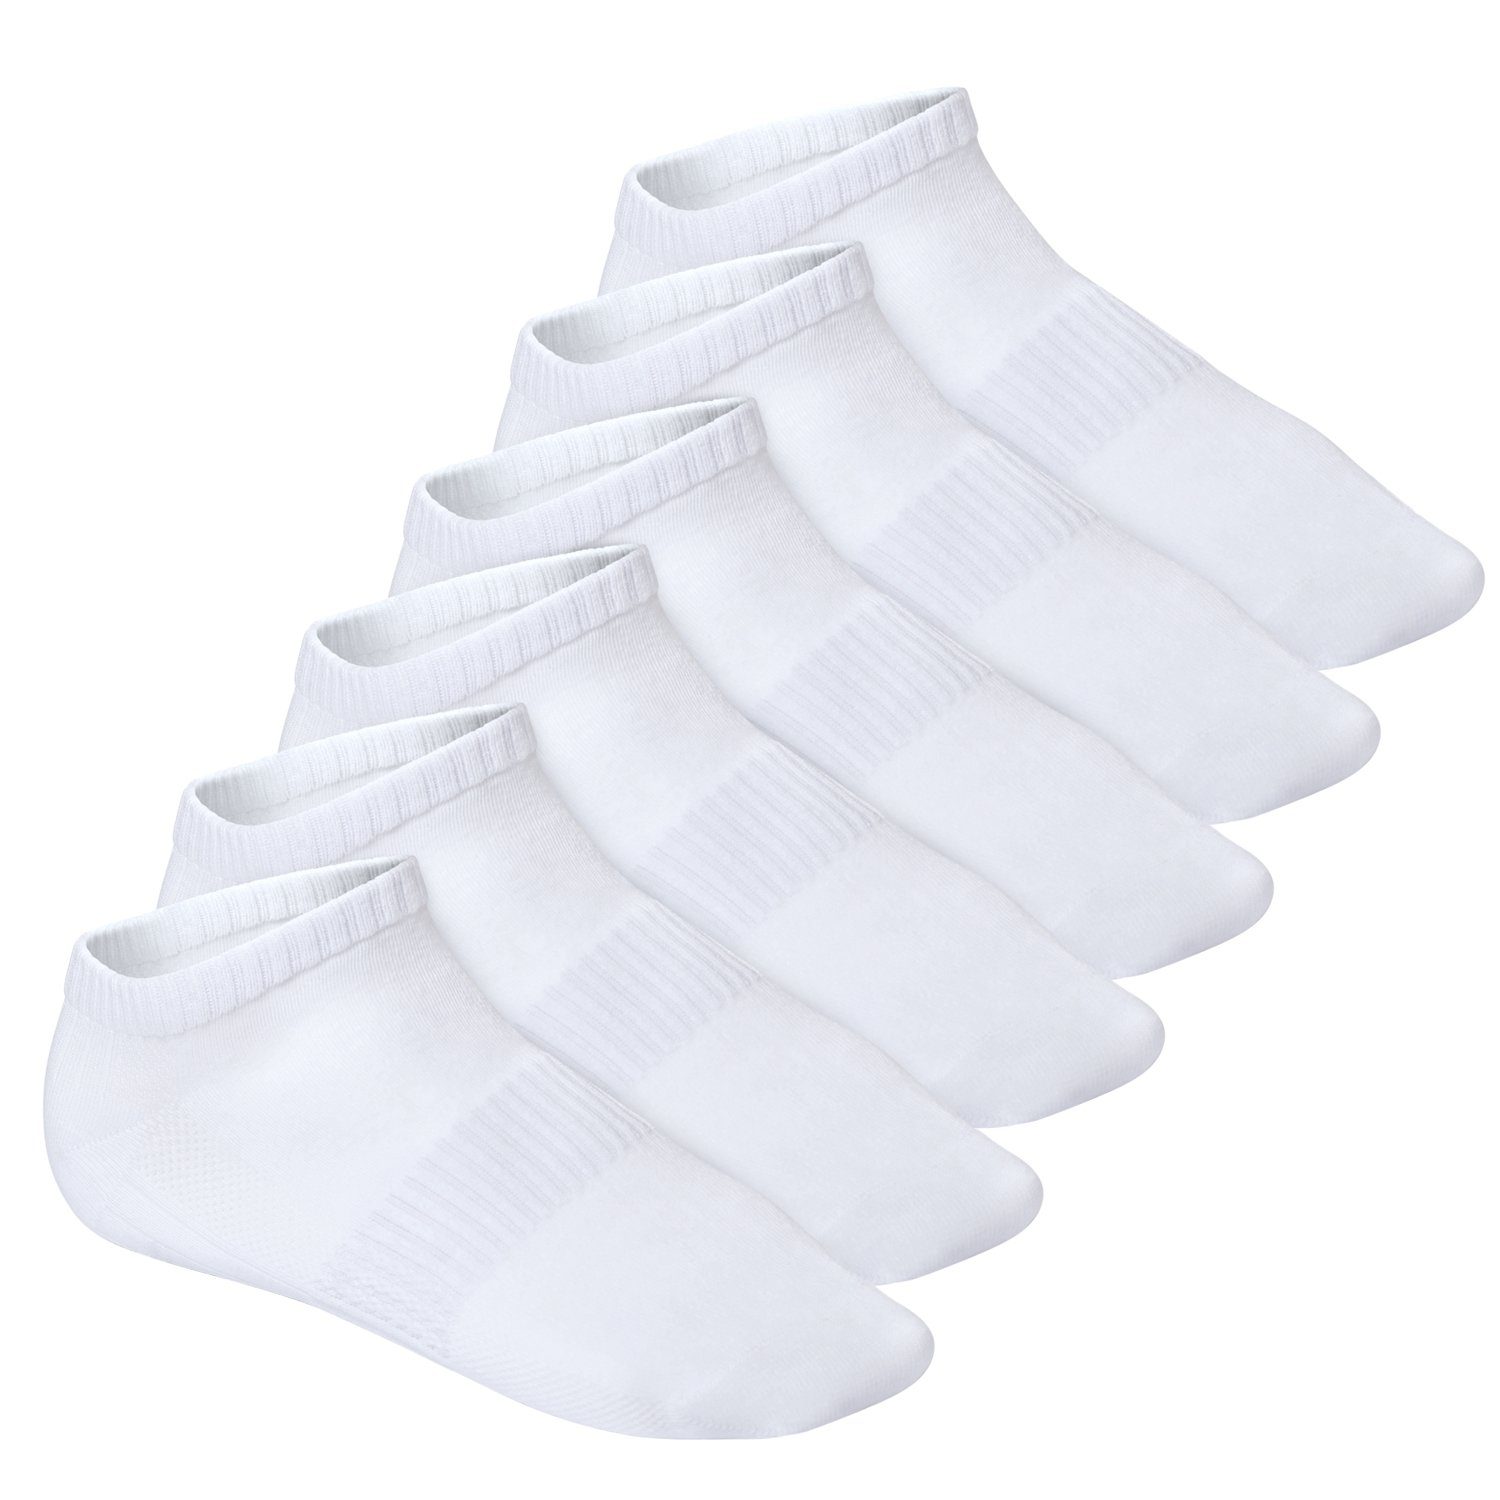 Footstar Füßlinge Damen & Herren Fitness Sneaker Socken (6 Paar) Mesh-Strick Weiß